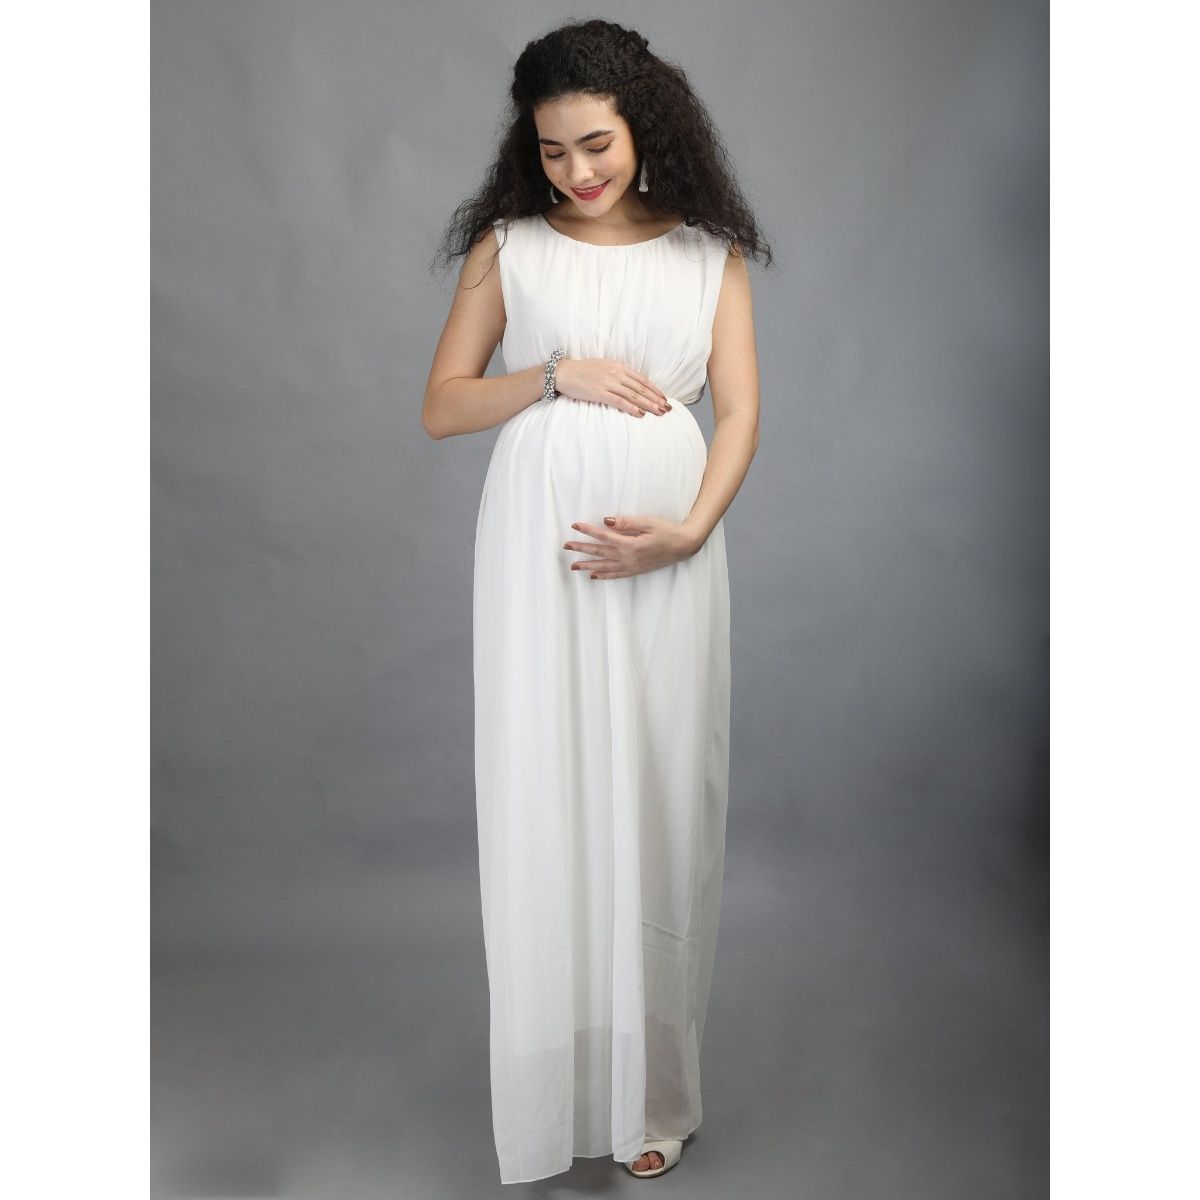 Buy Grey Maternity Leggings Online  Maternity Wears Online – The Mom Store